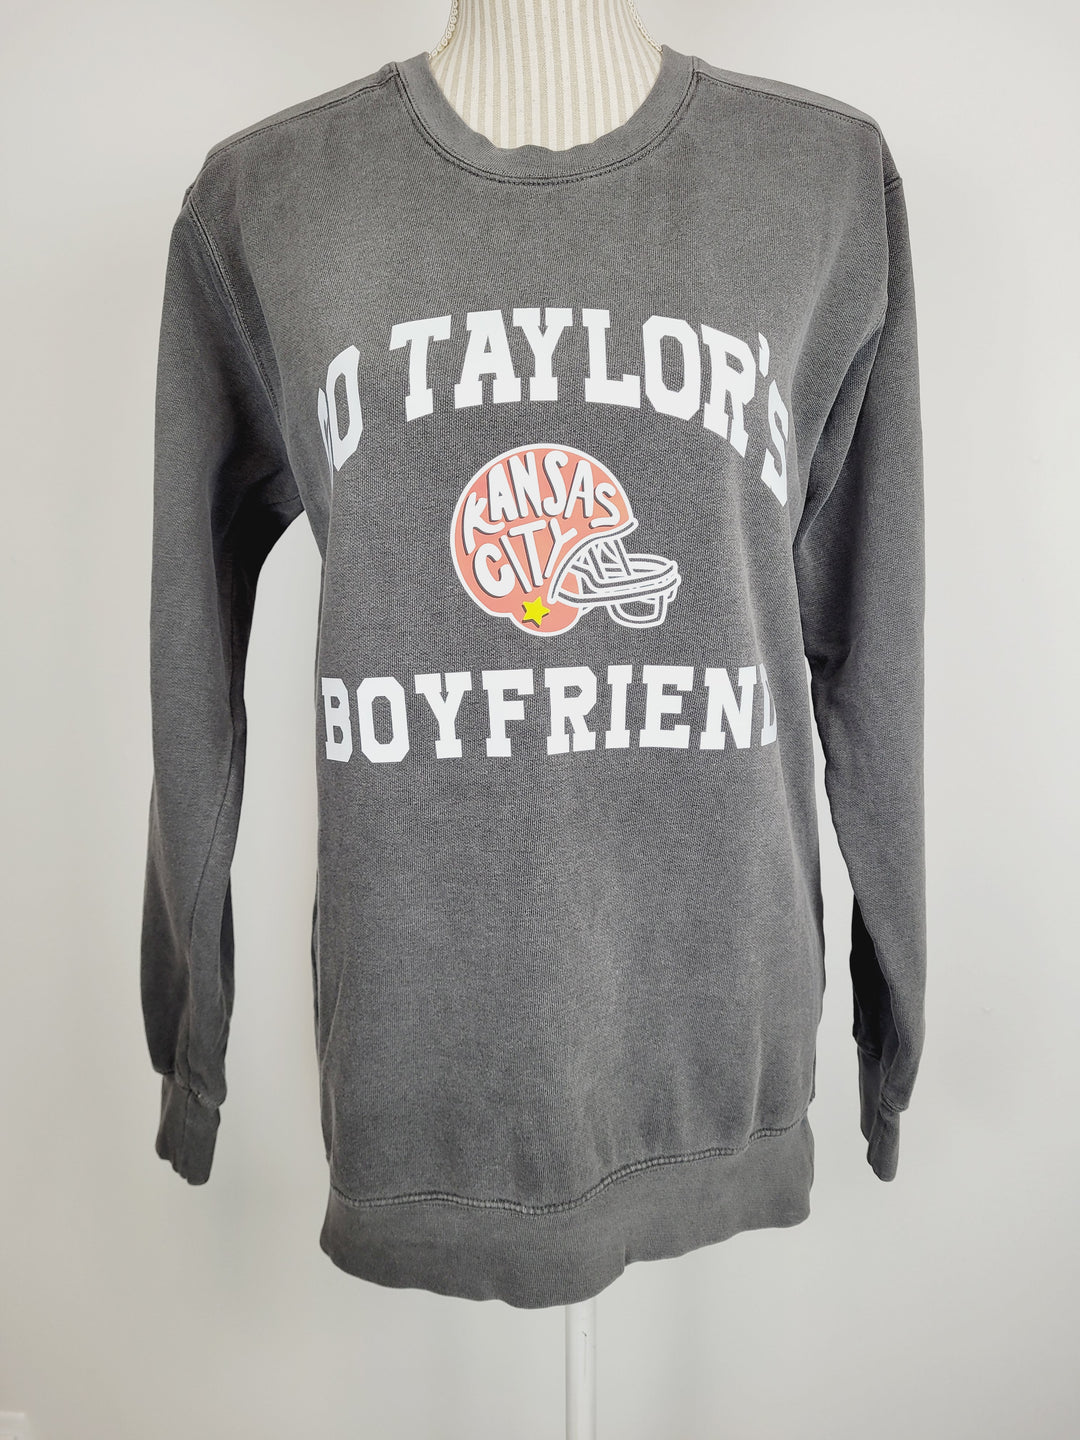 June & Co Designs, Go Taylor’s Boyfriend Premium Comfort Crewneck Sweaters